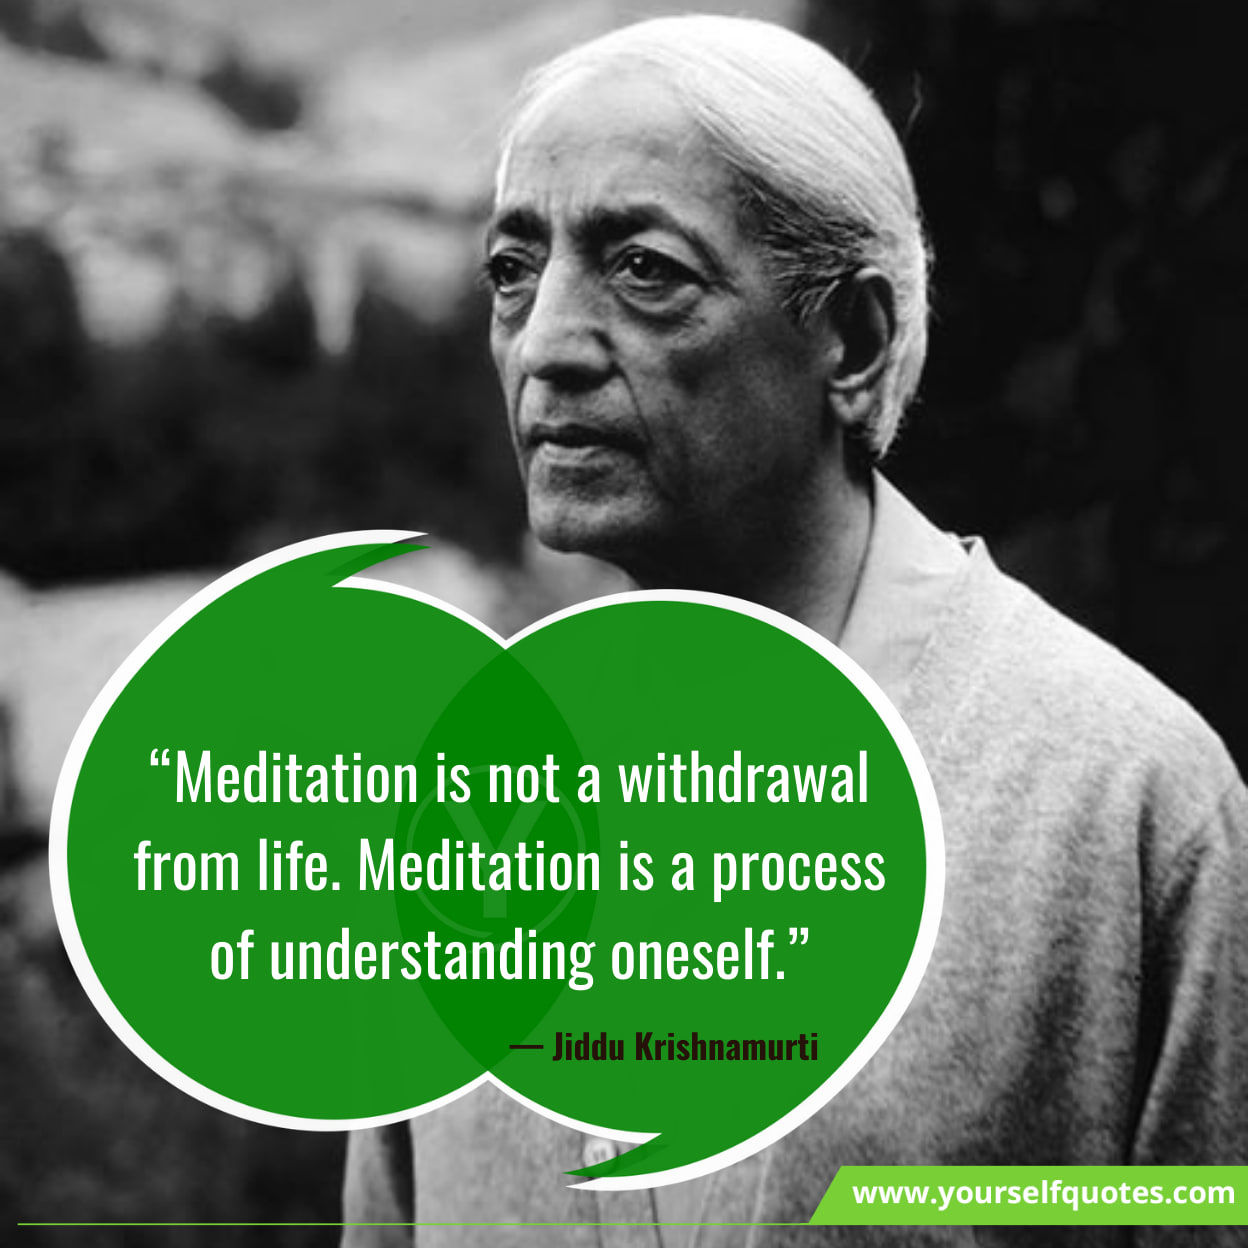 Inspirational Meditation Quotes On Life